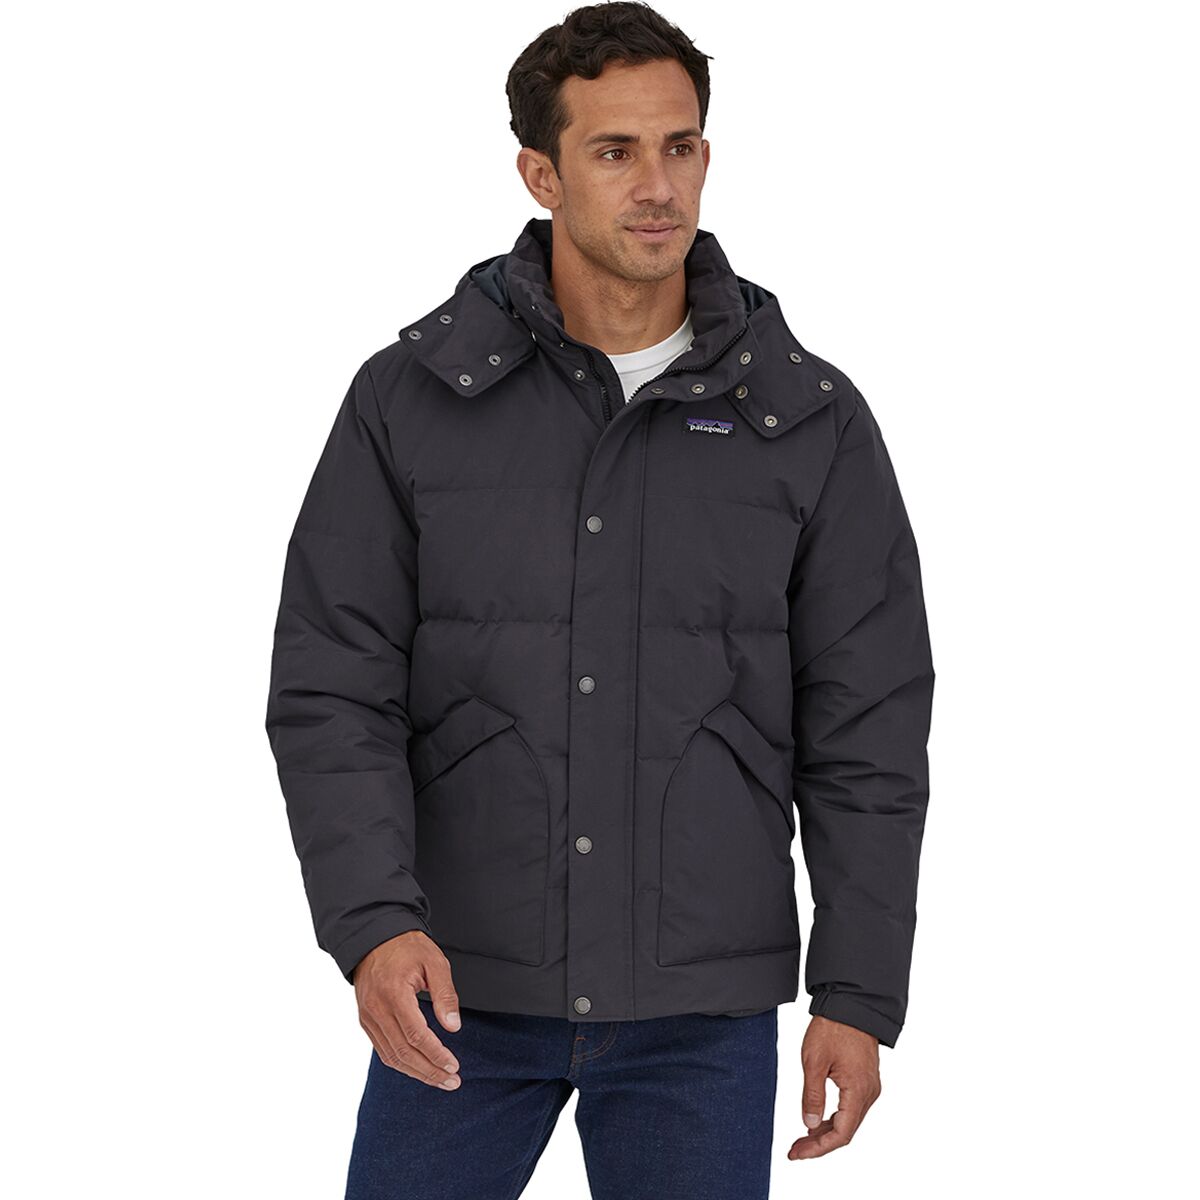 Patagonia Downdrift Jacket - Men's product image